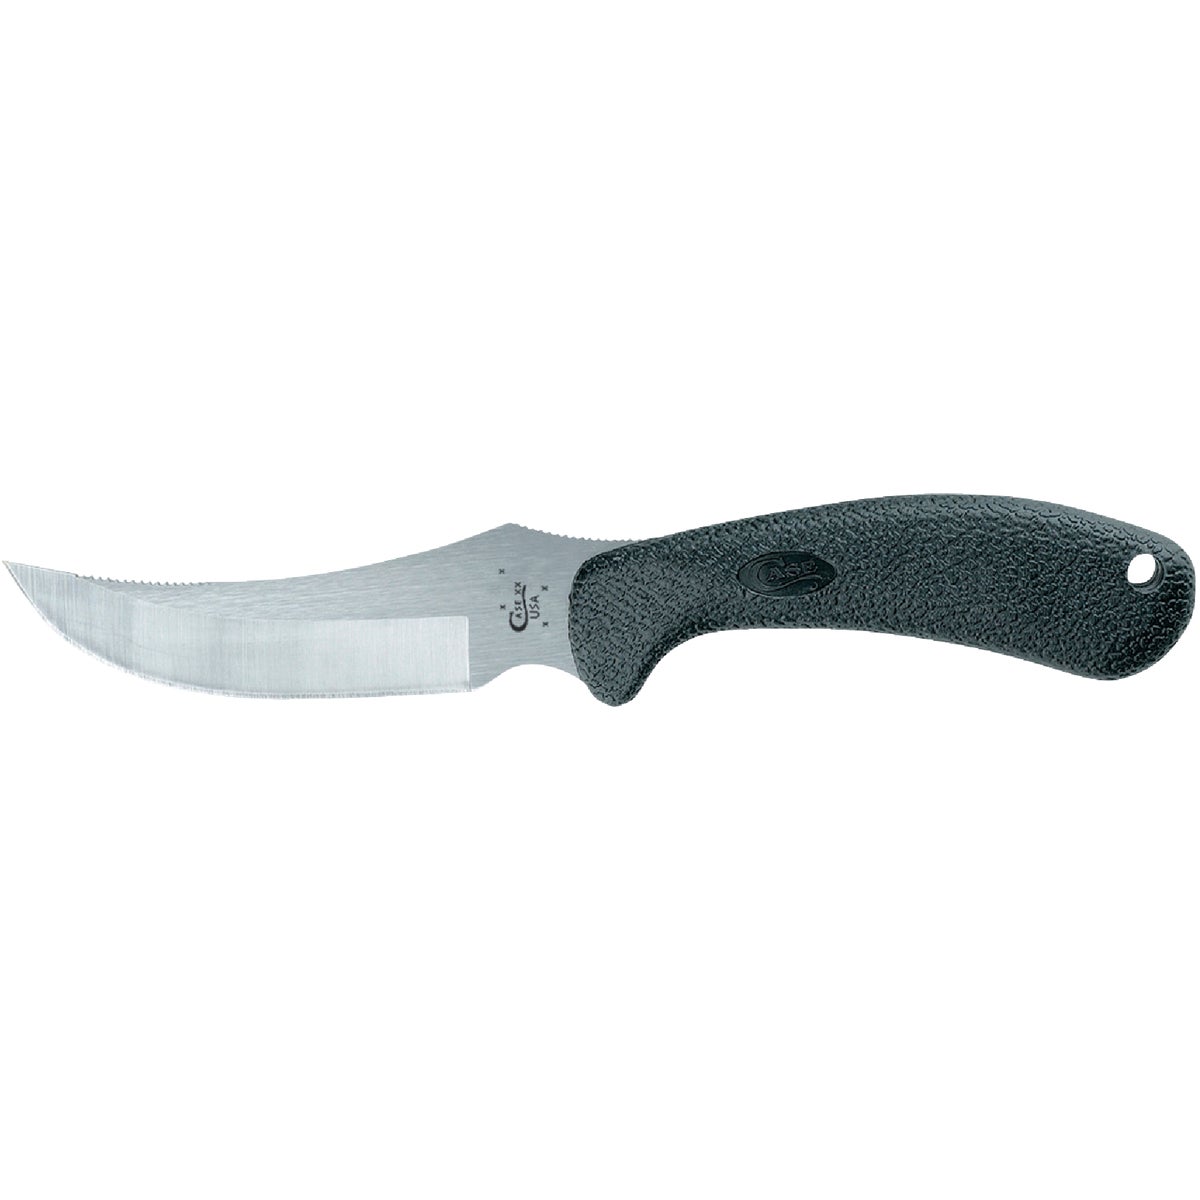 Case Ridgeback Hunter 4.13 In. Stainless Steel Fixed Blade Knife